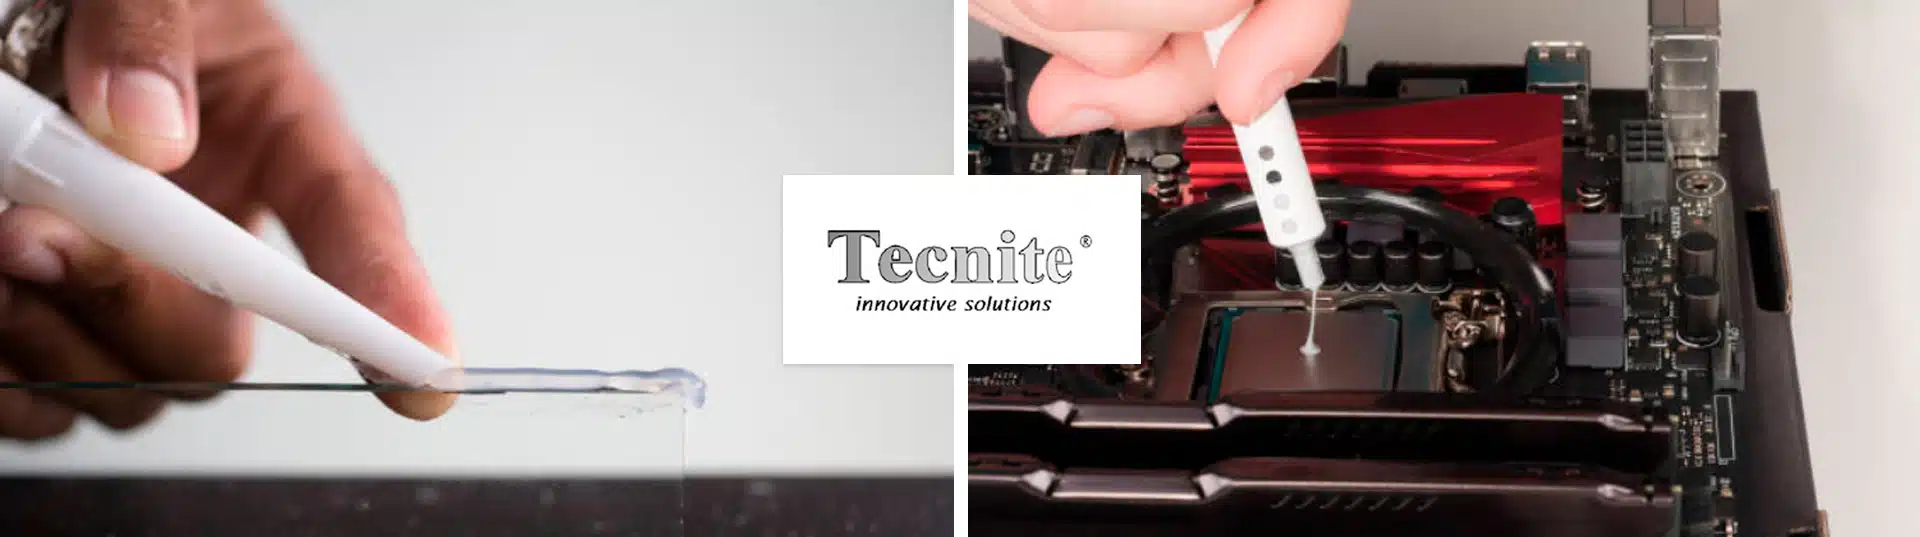 Tecnite innovative Industrial Solutions